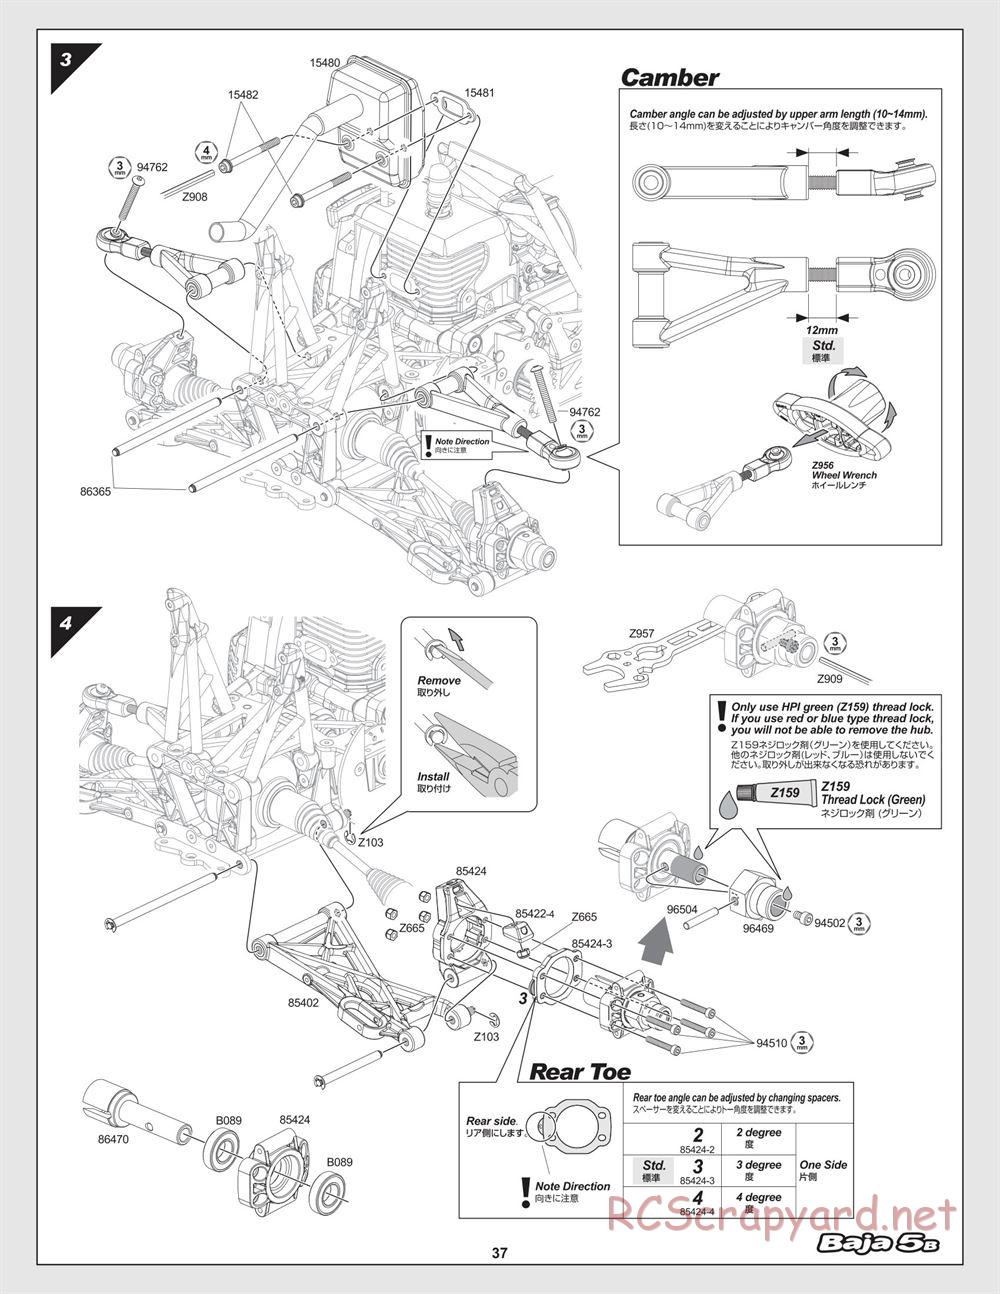 HPI - Baja 5B - Manual - Page 37